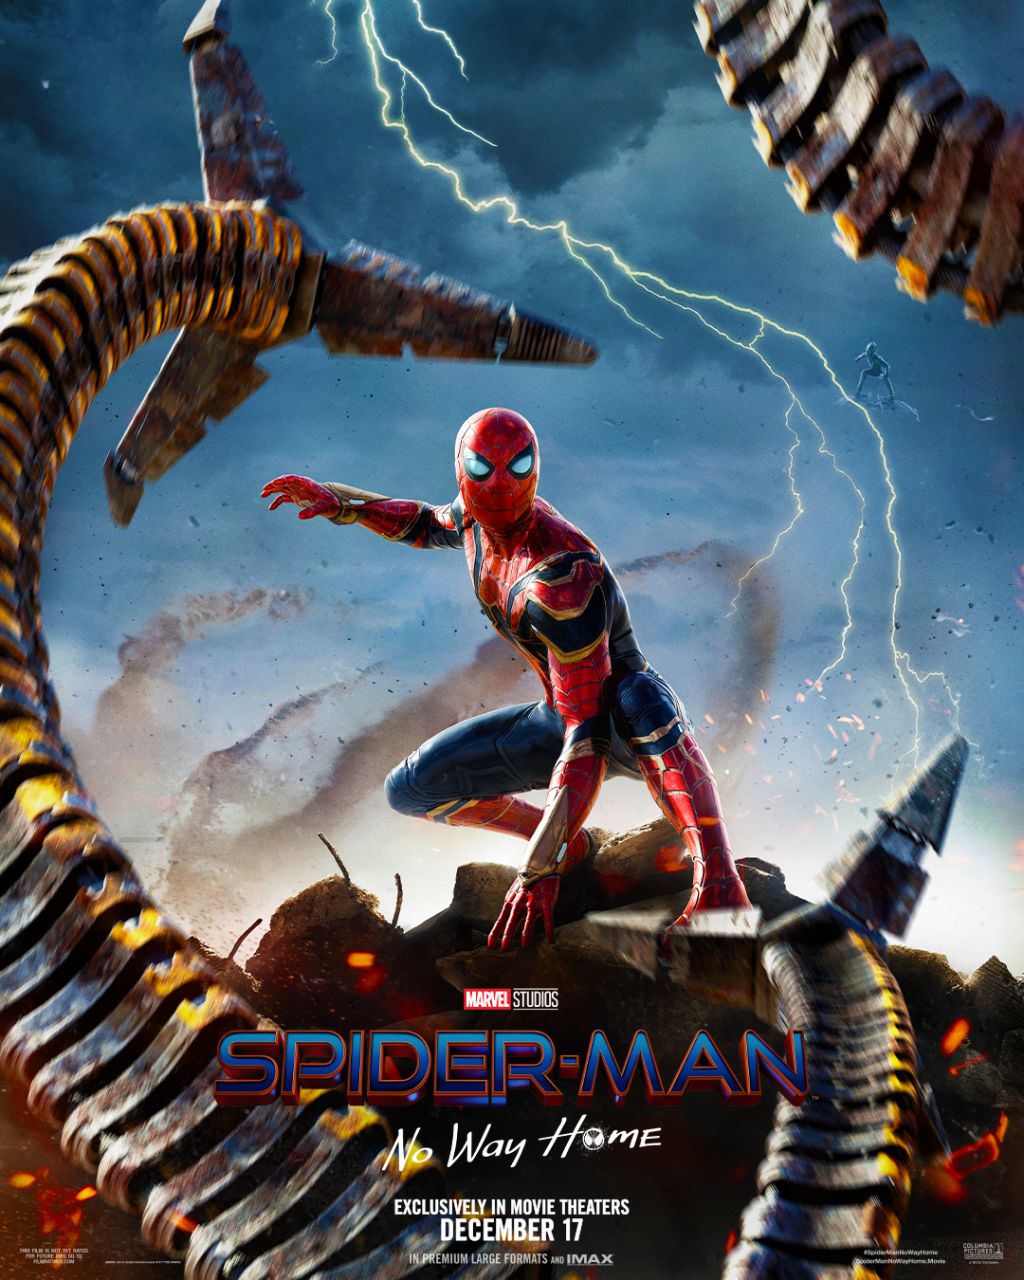 Spider-Man: No Way Home poster